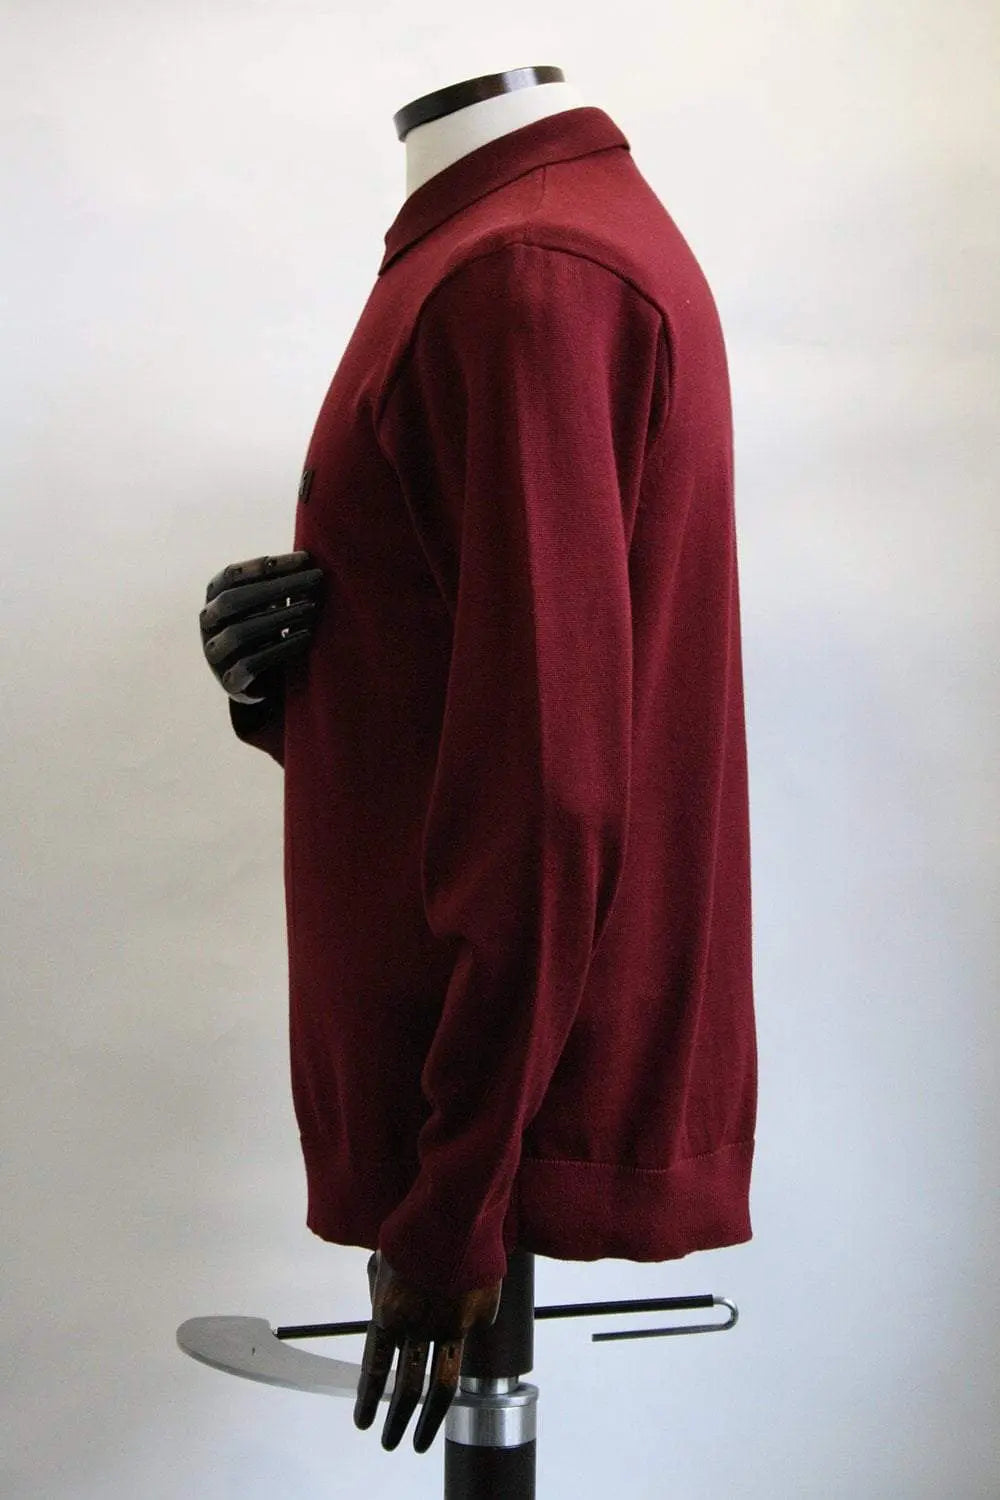 Francesco Port Long-Sleeved Knitted Polo Shirt Gabicci Vintage